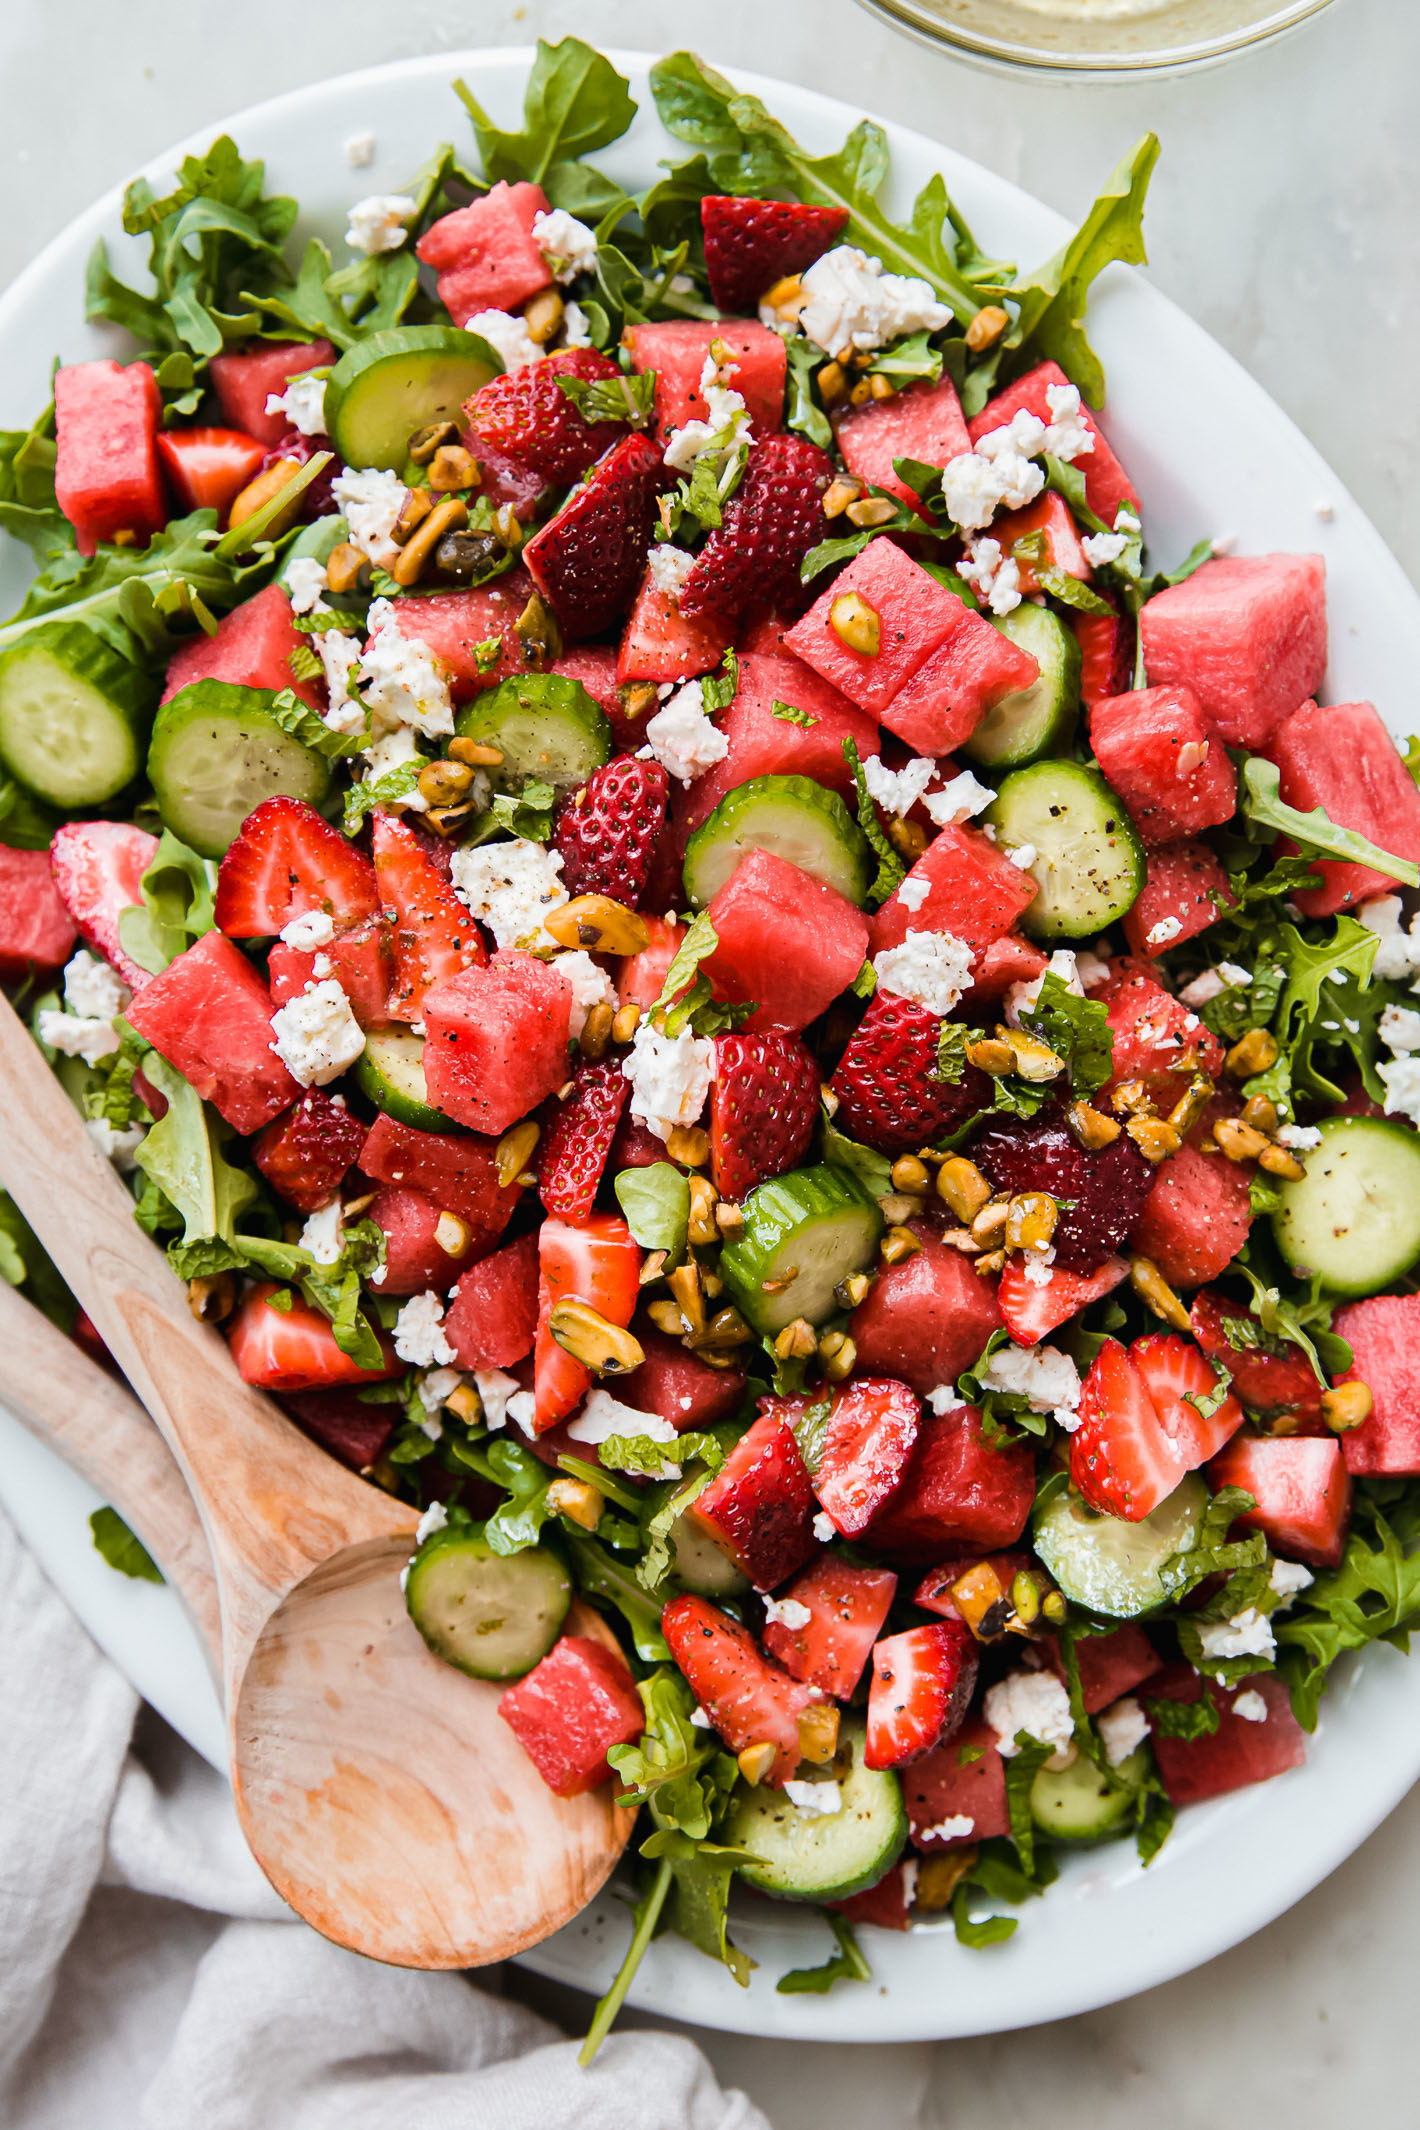 Arugula salad with feta, watermelon and strawberry.